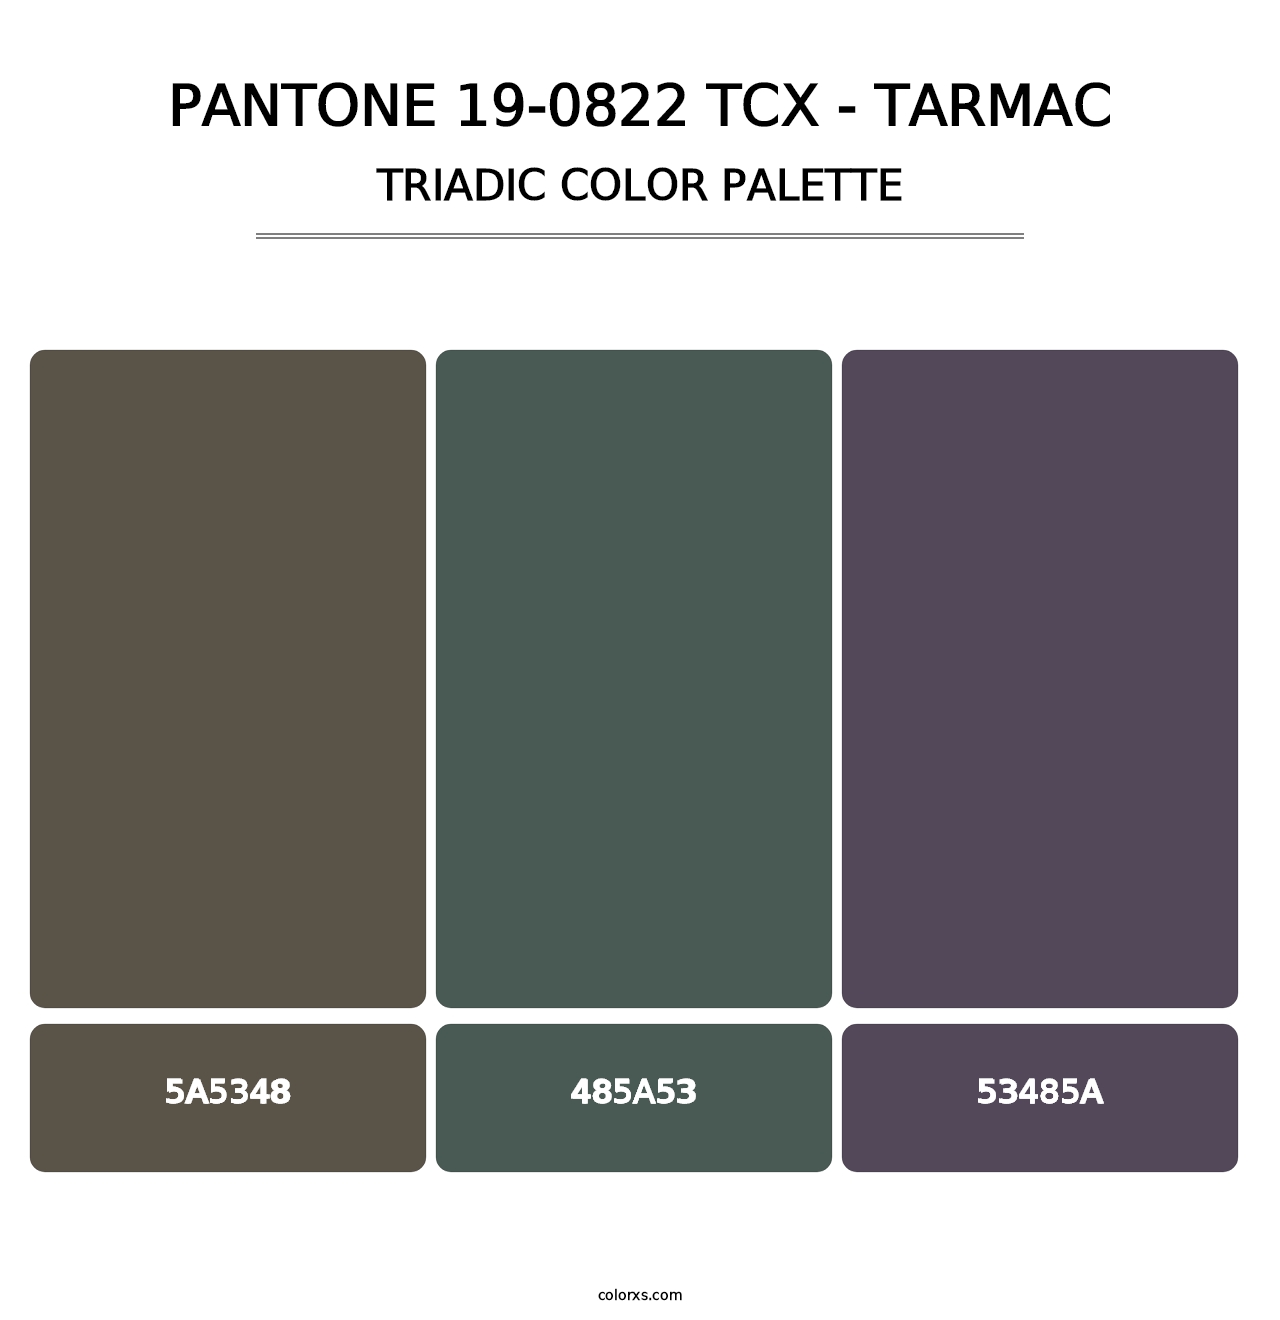 PANTONE 19-0822 TCX - Tarmac - Triadic Color Palette